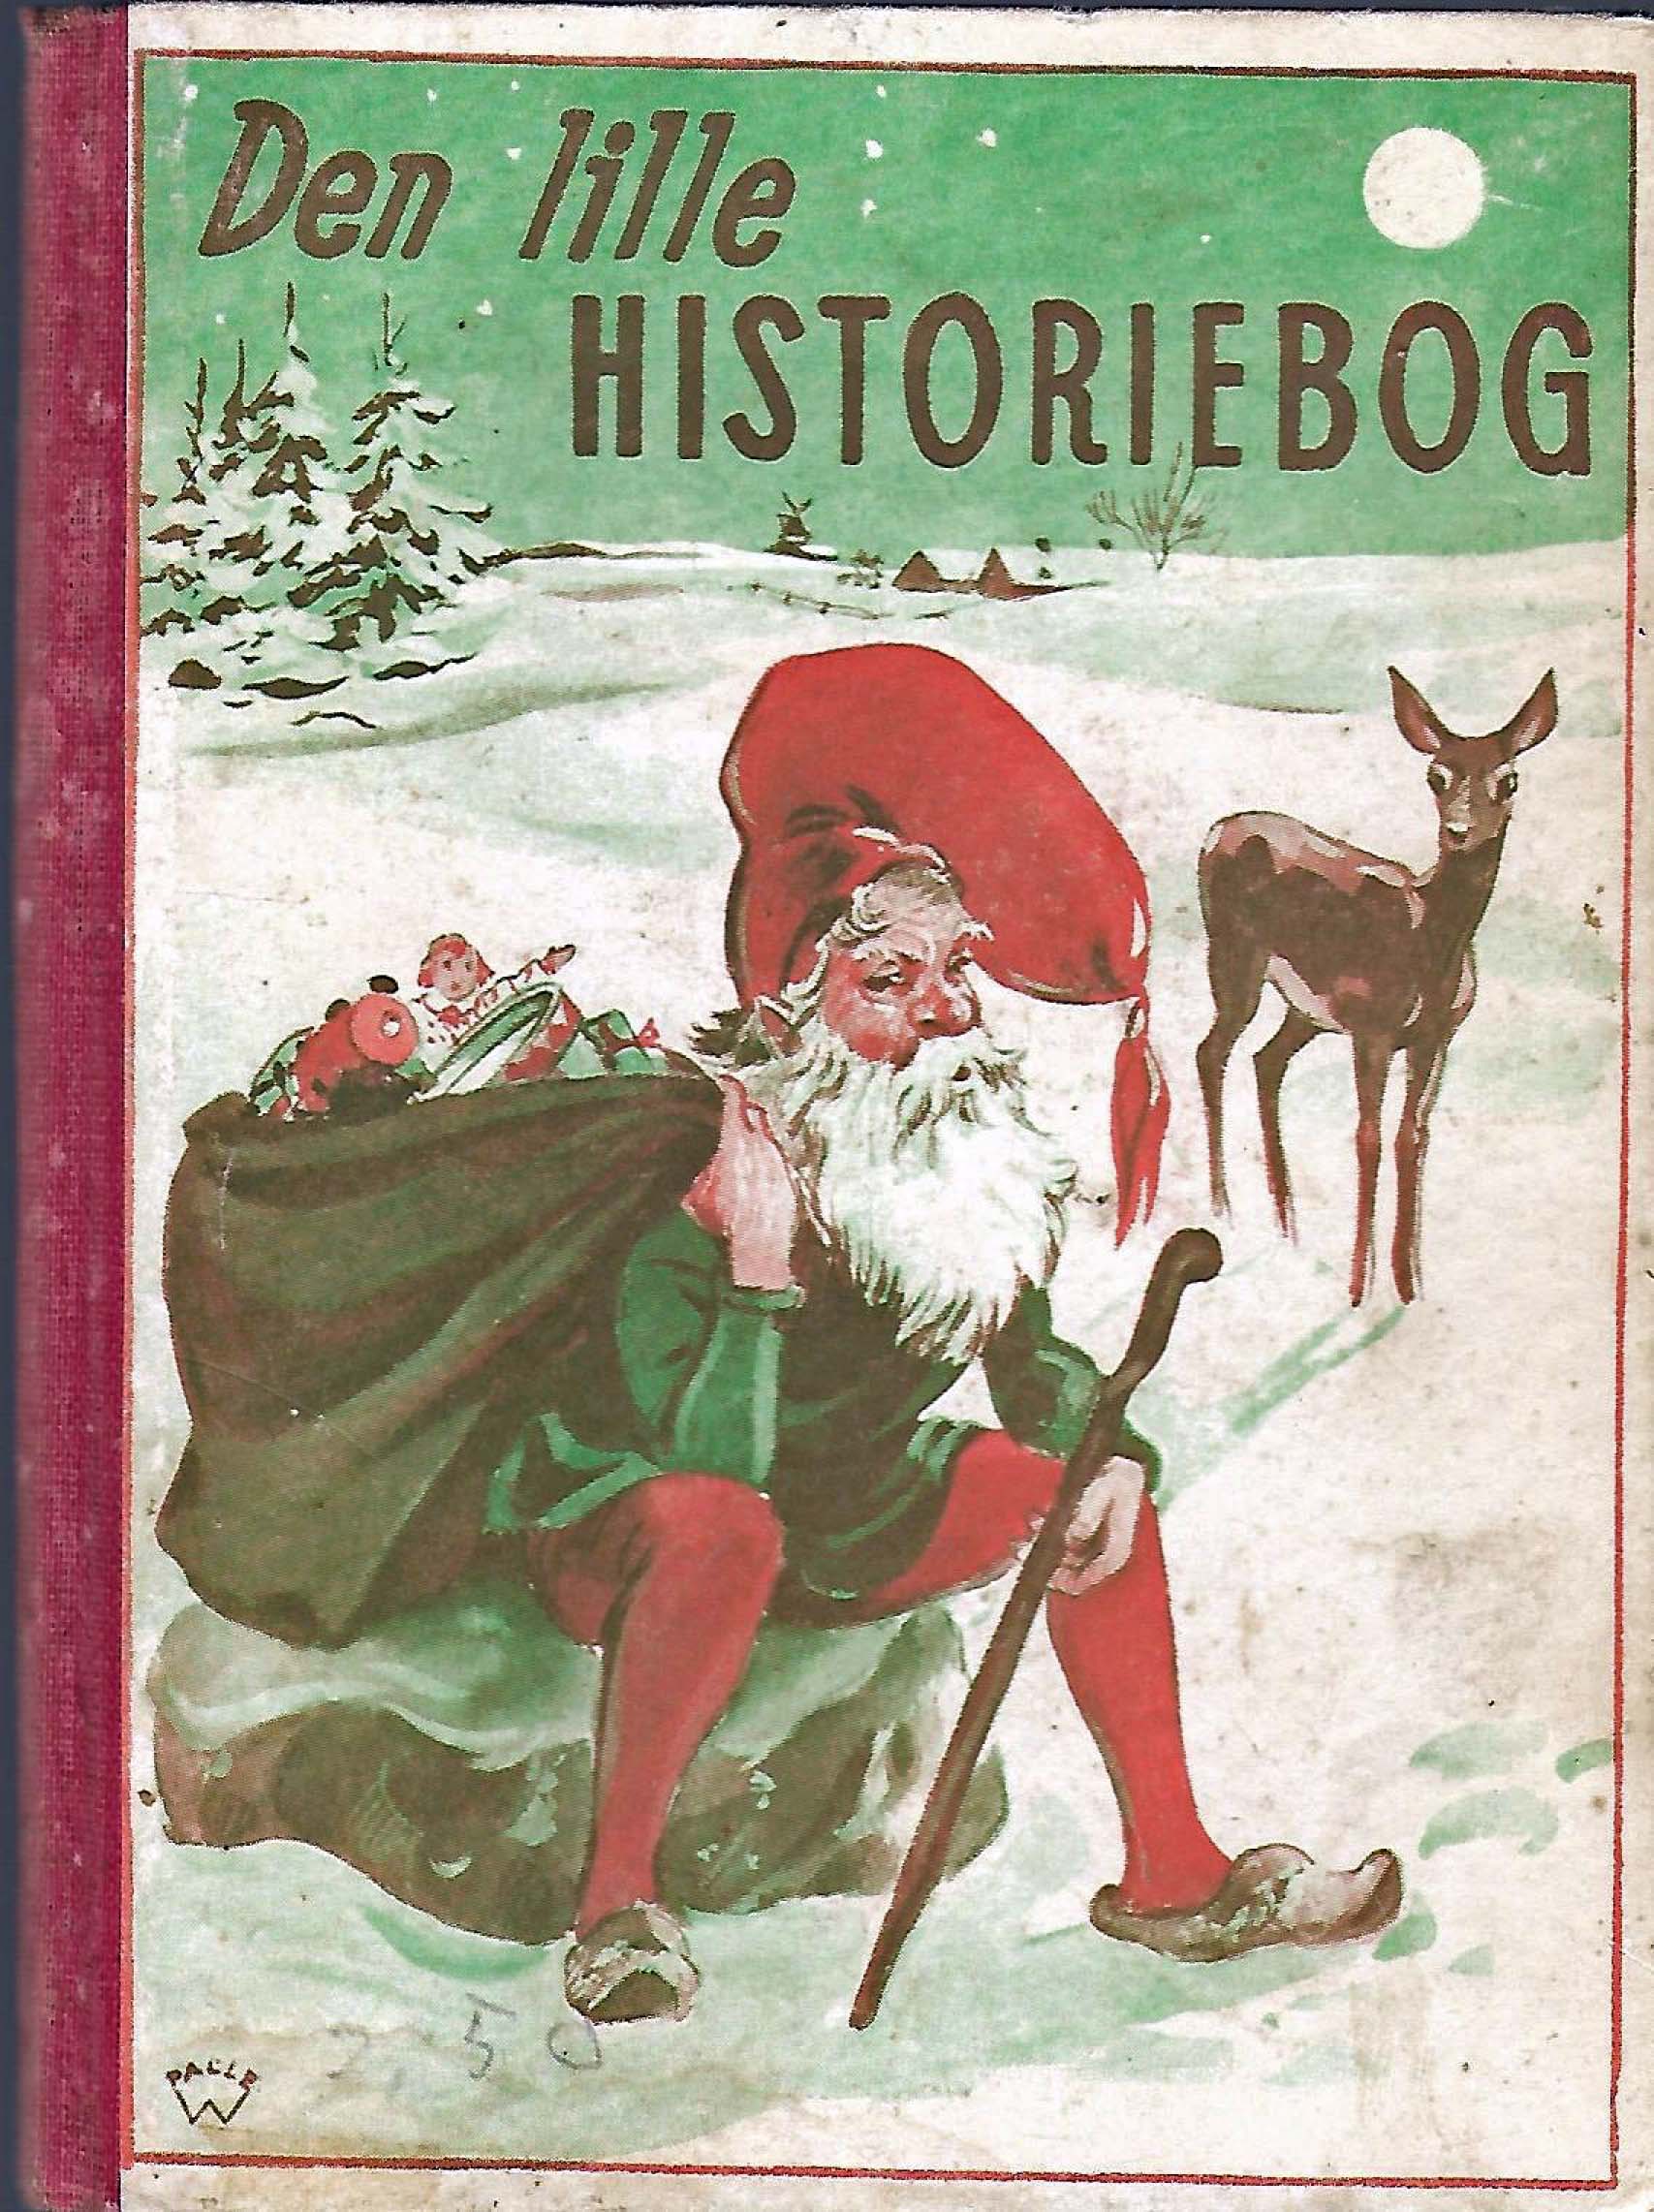 1941 Den lille Historiebog